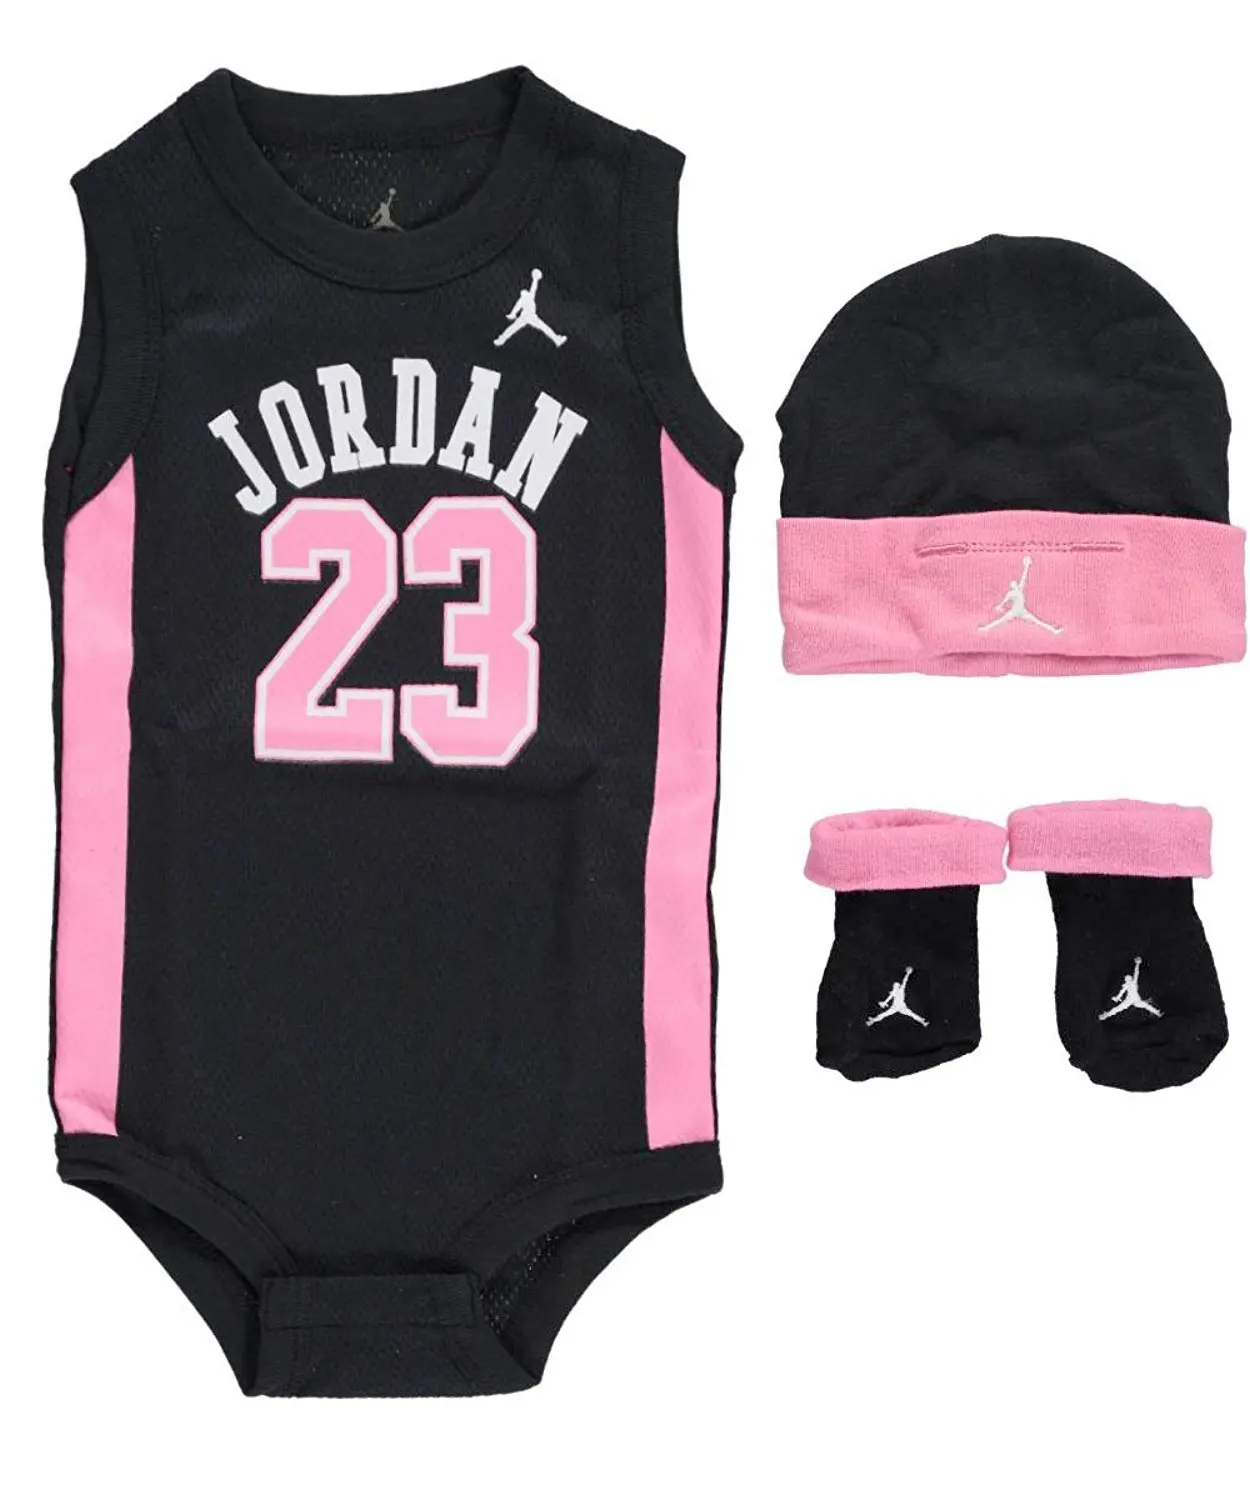 jordan baby clothes